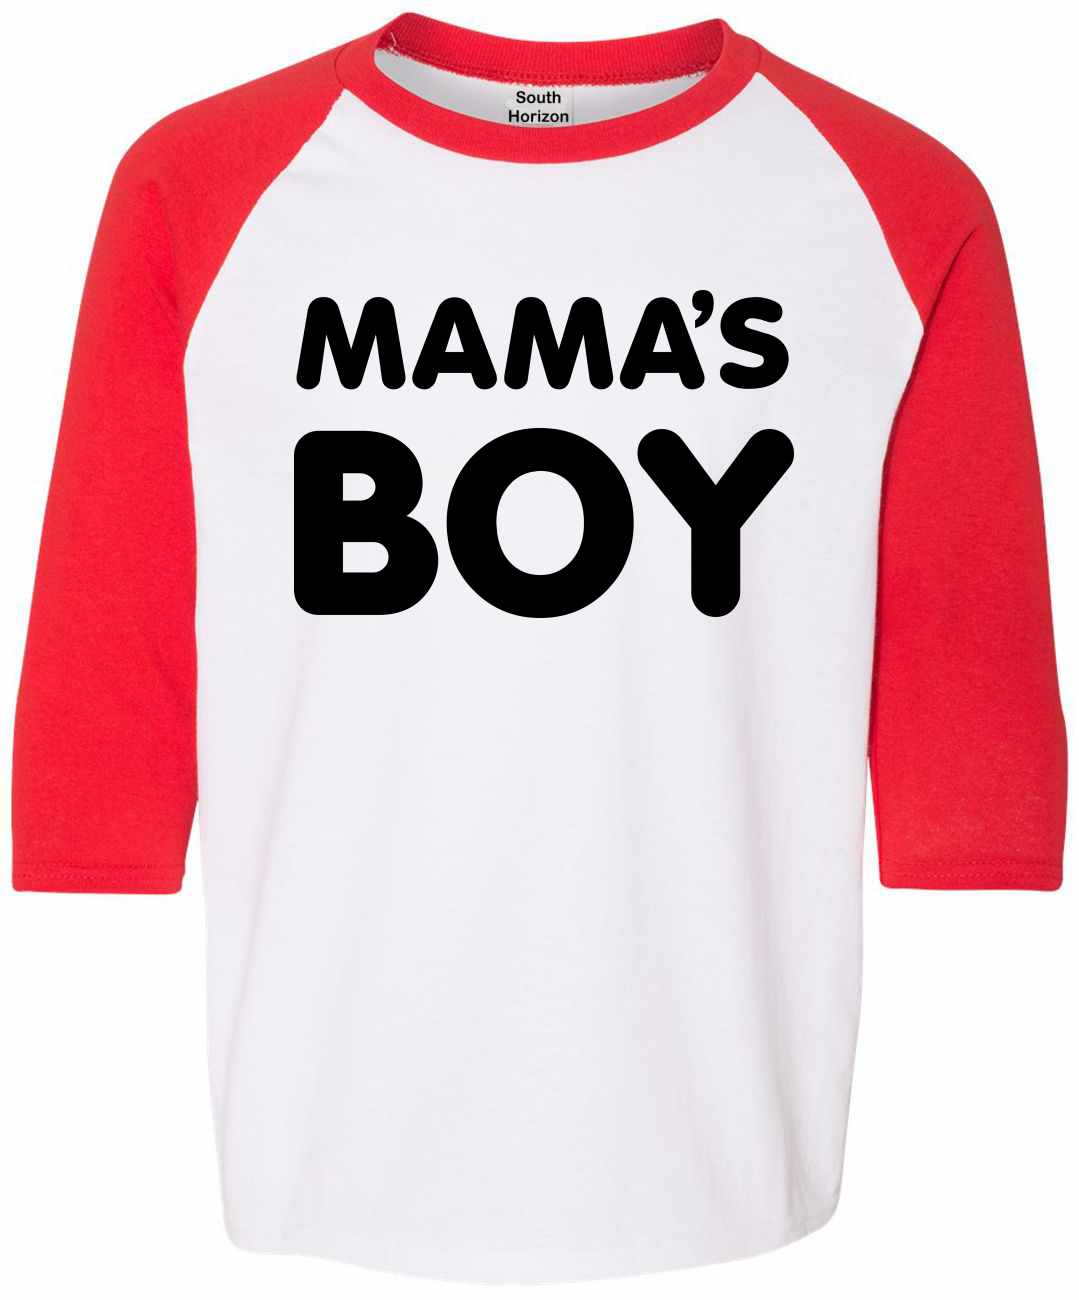 MAMA'S BOY on Youth Baseball Shirt (#1185-212)